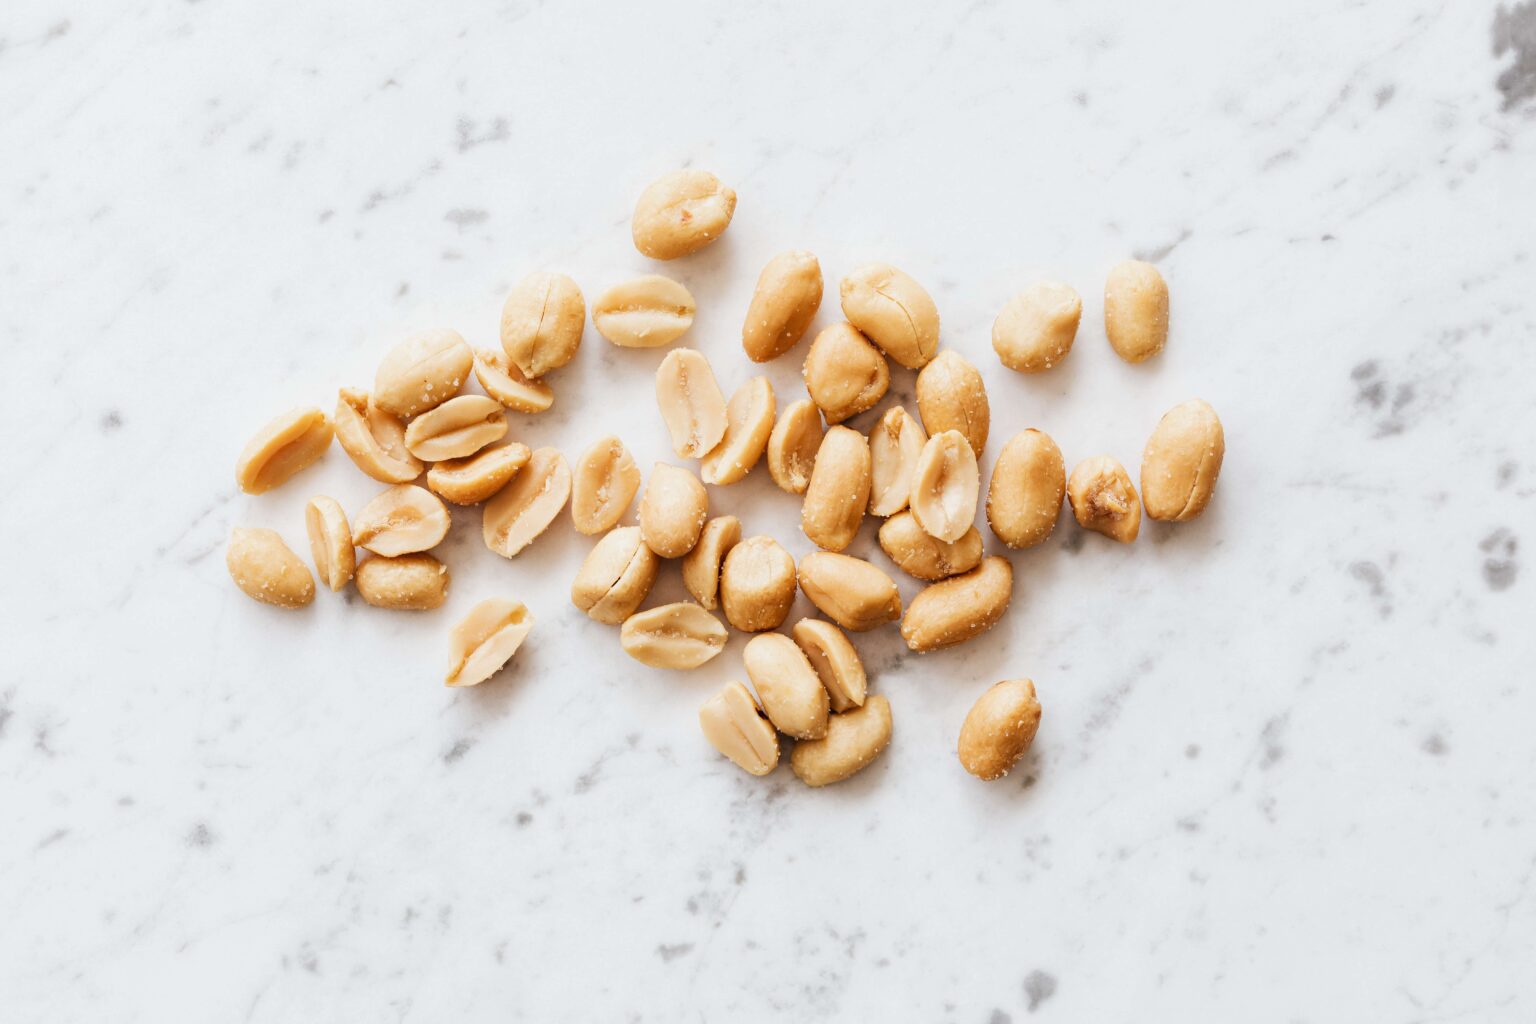 Sleep and allergies, the study on peanuts